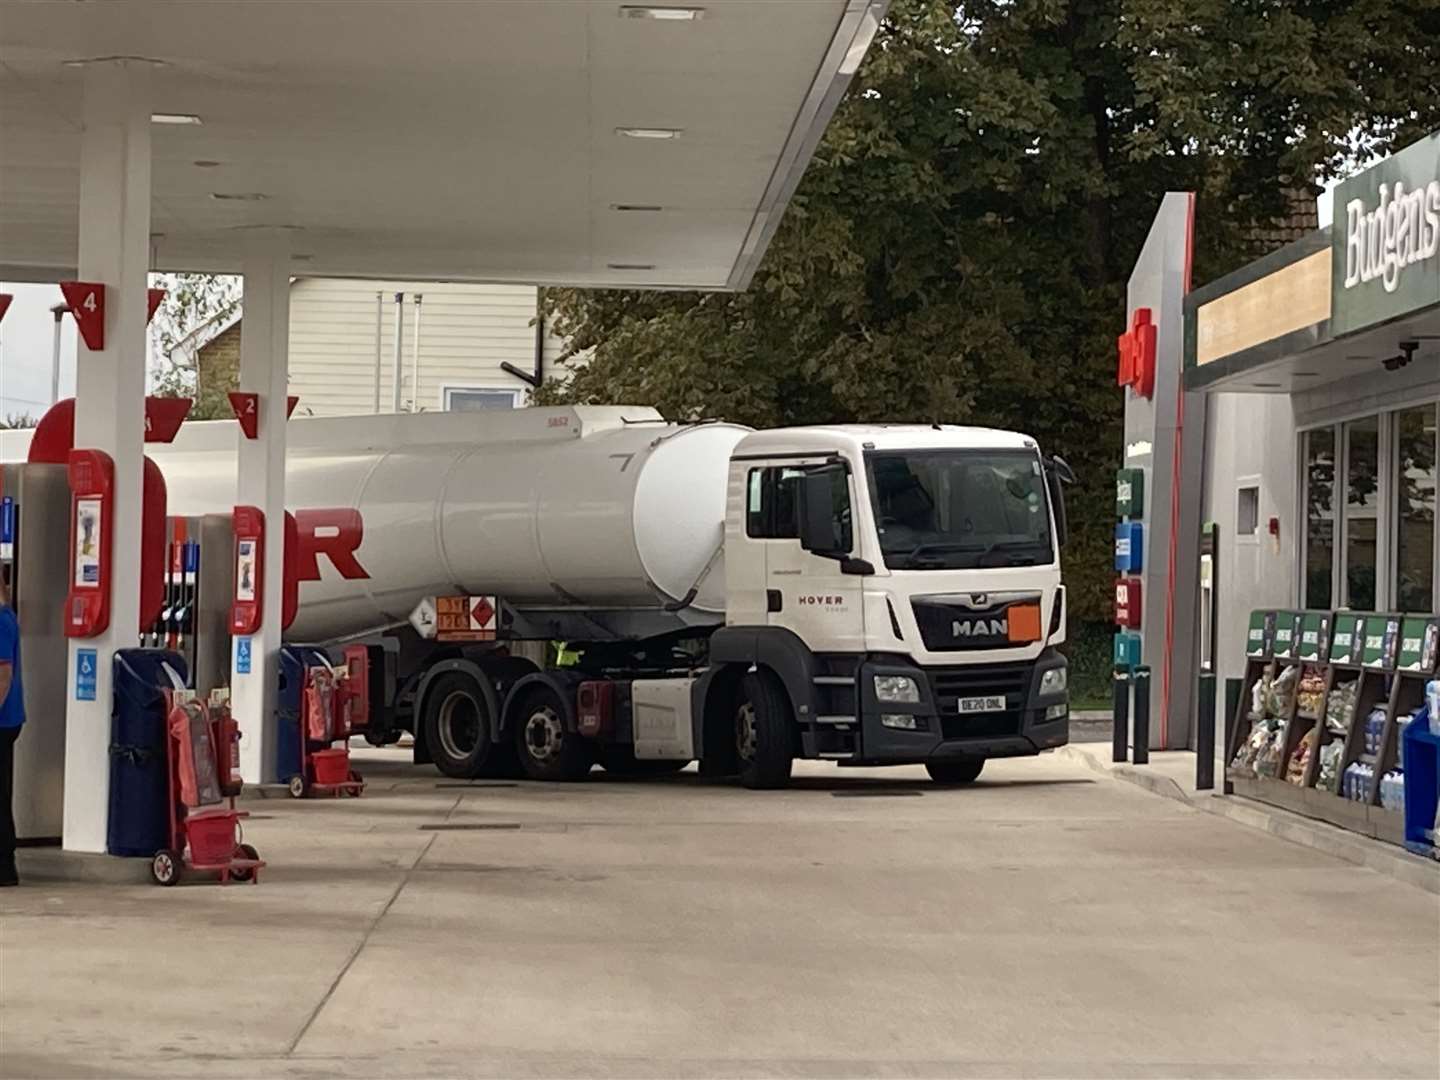 Fuel tanker arrives at the Esso garage on the A2 at Sittingbourne